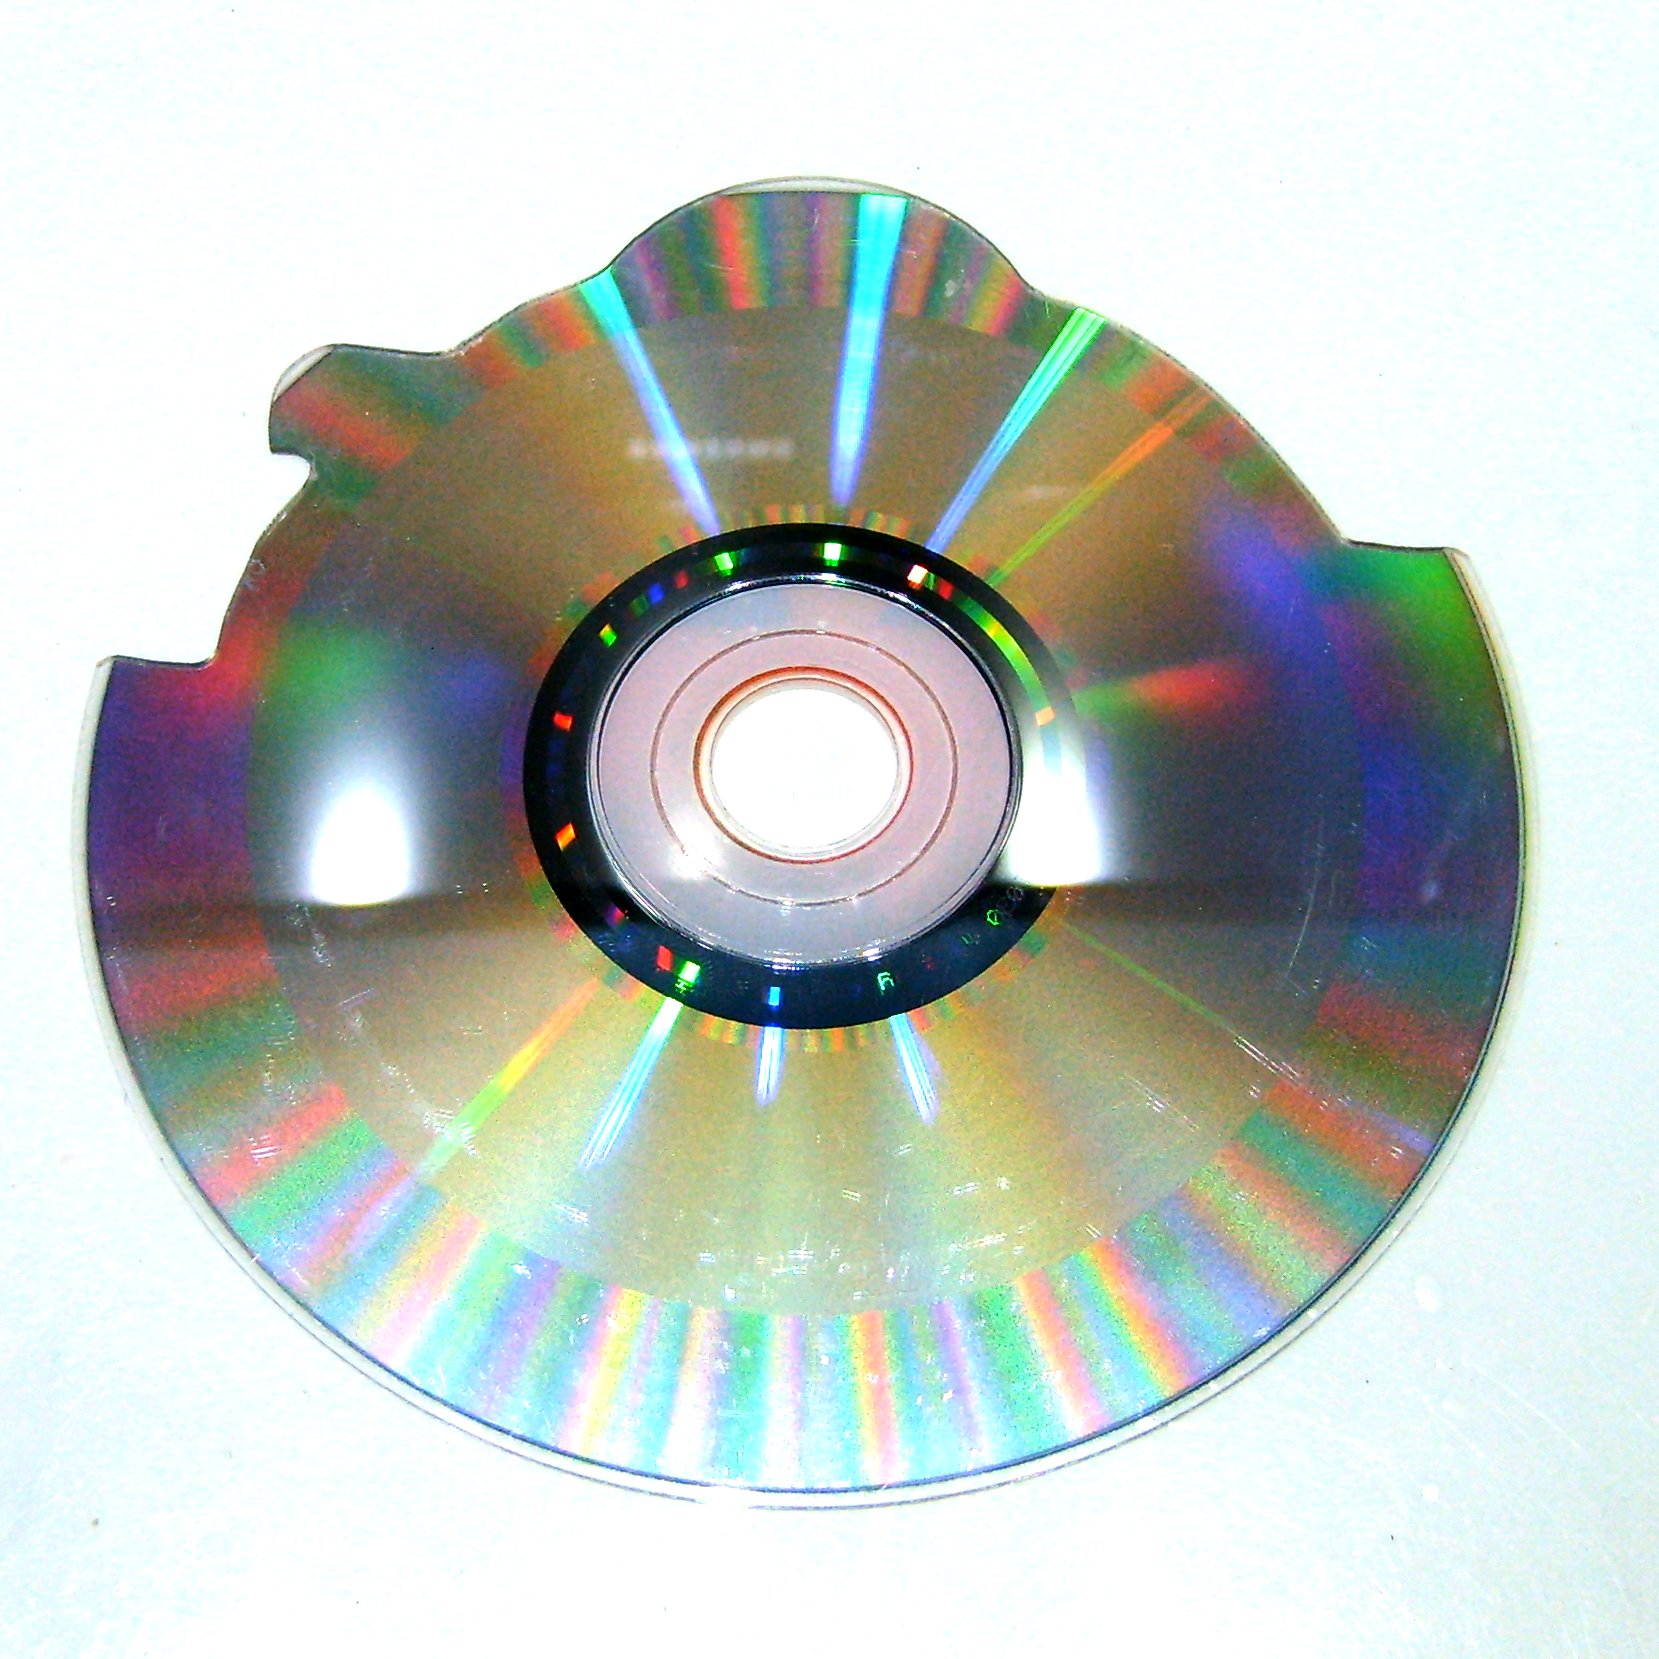 Shaped Compact Disc - Wikipedia